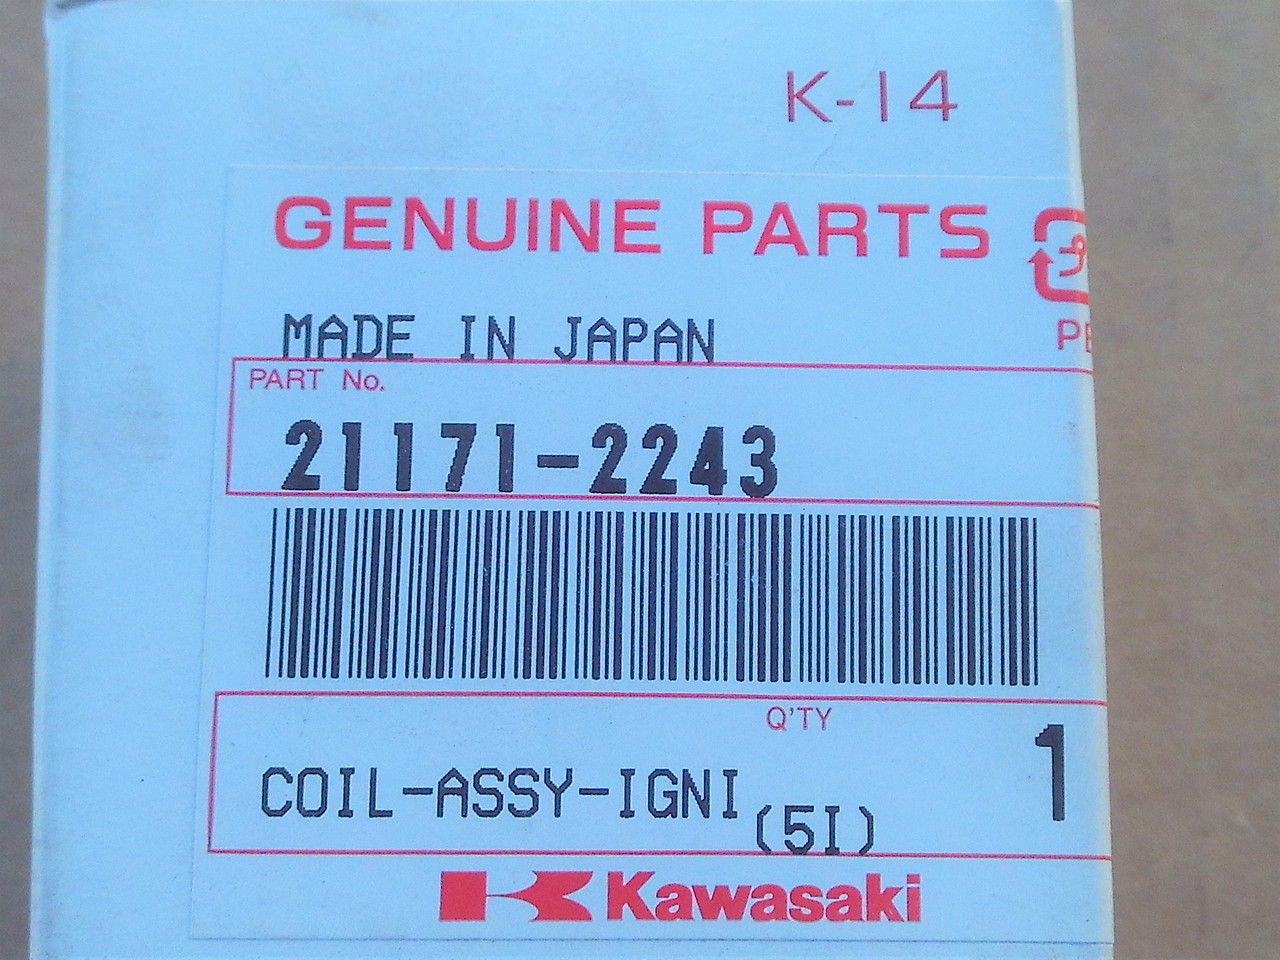 Kawasaki Ignition Coil for KBL27A, KGT27A, KTR27A, 211712243, 21171-2243